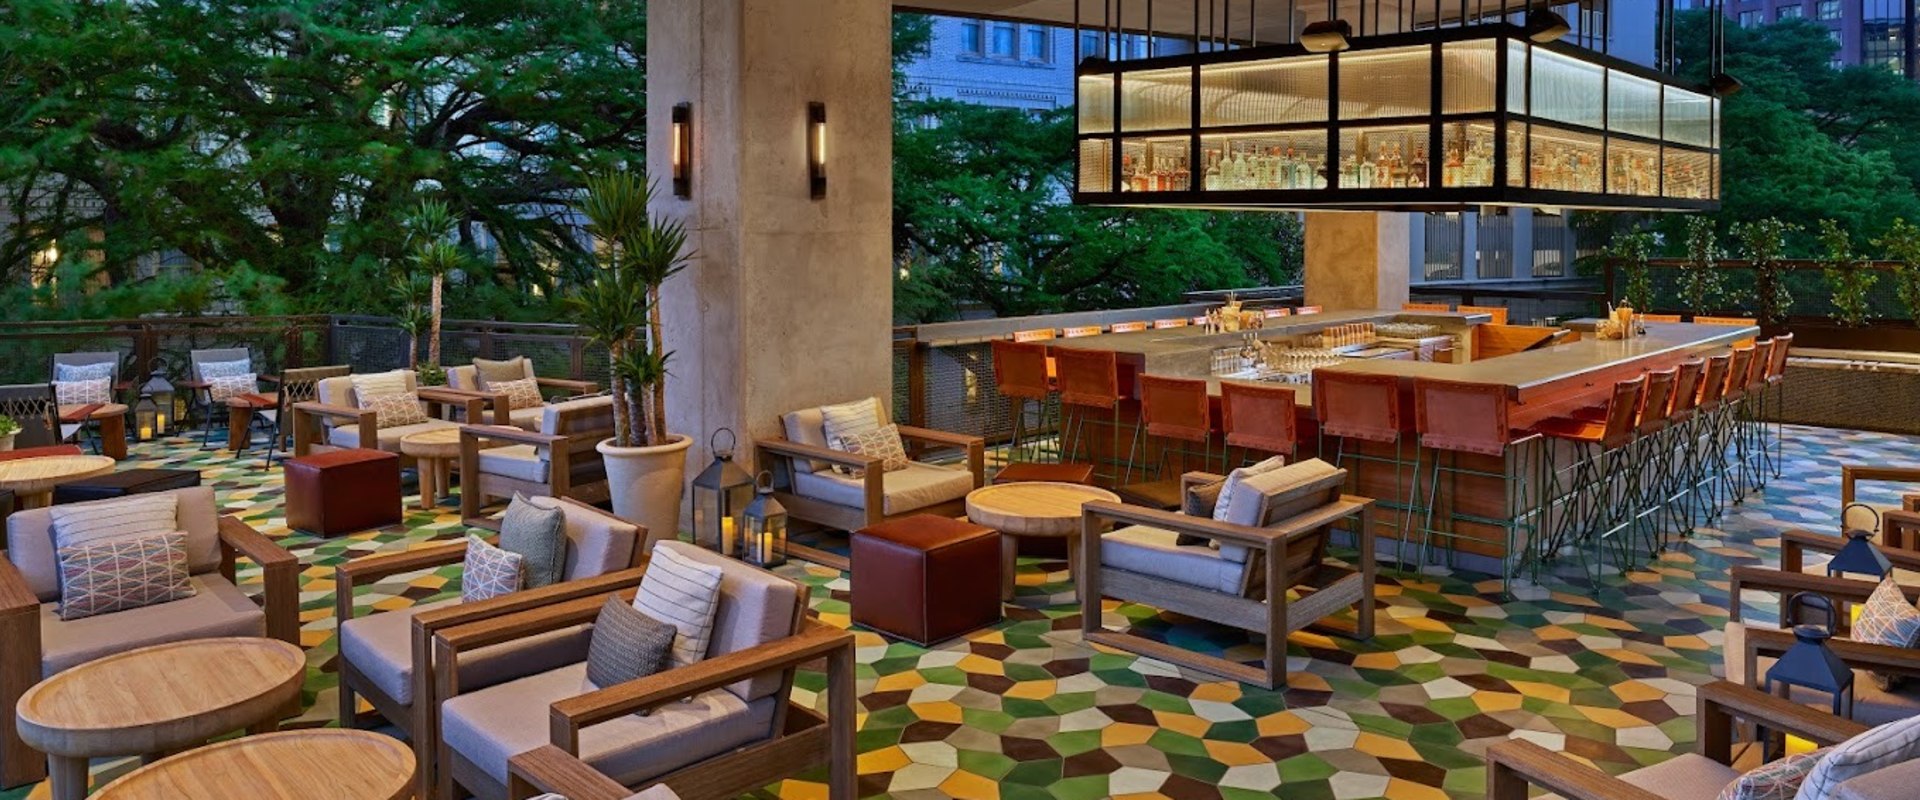 The Vibrant Nightlife of San Antonio's Lounges